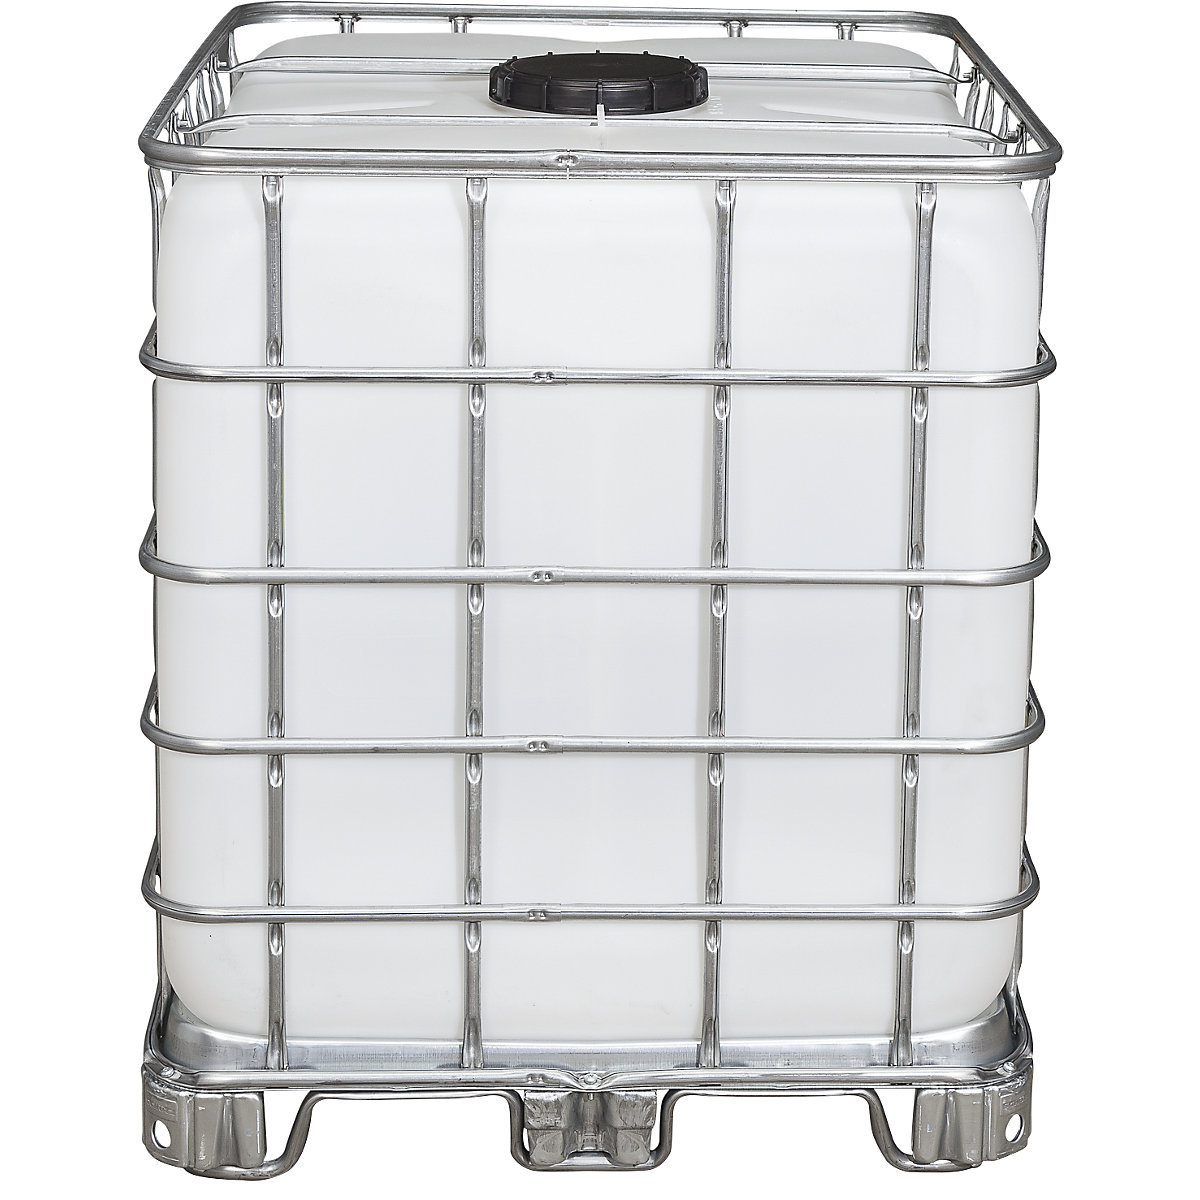 RECOBULK IBC container (Product illustration 5)-4